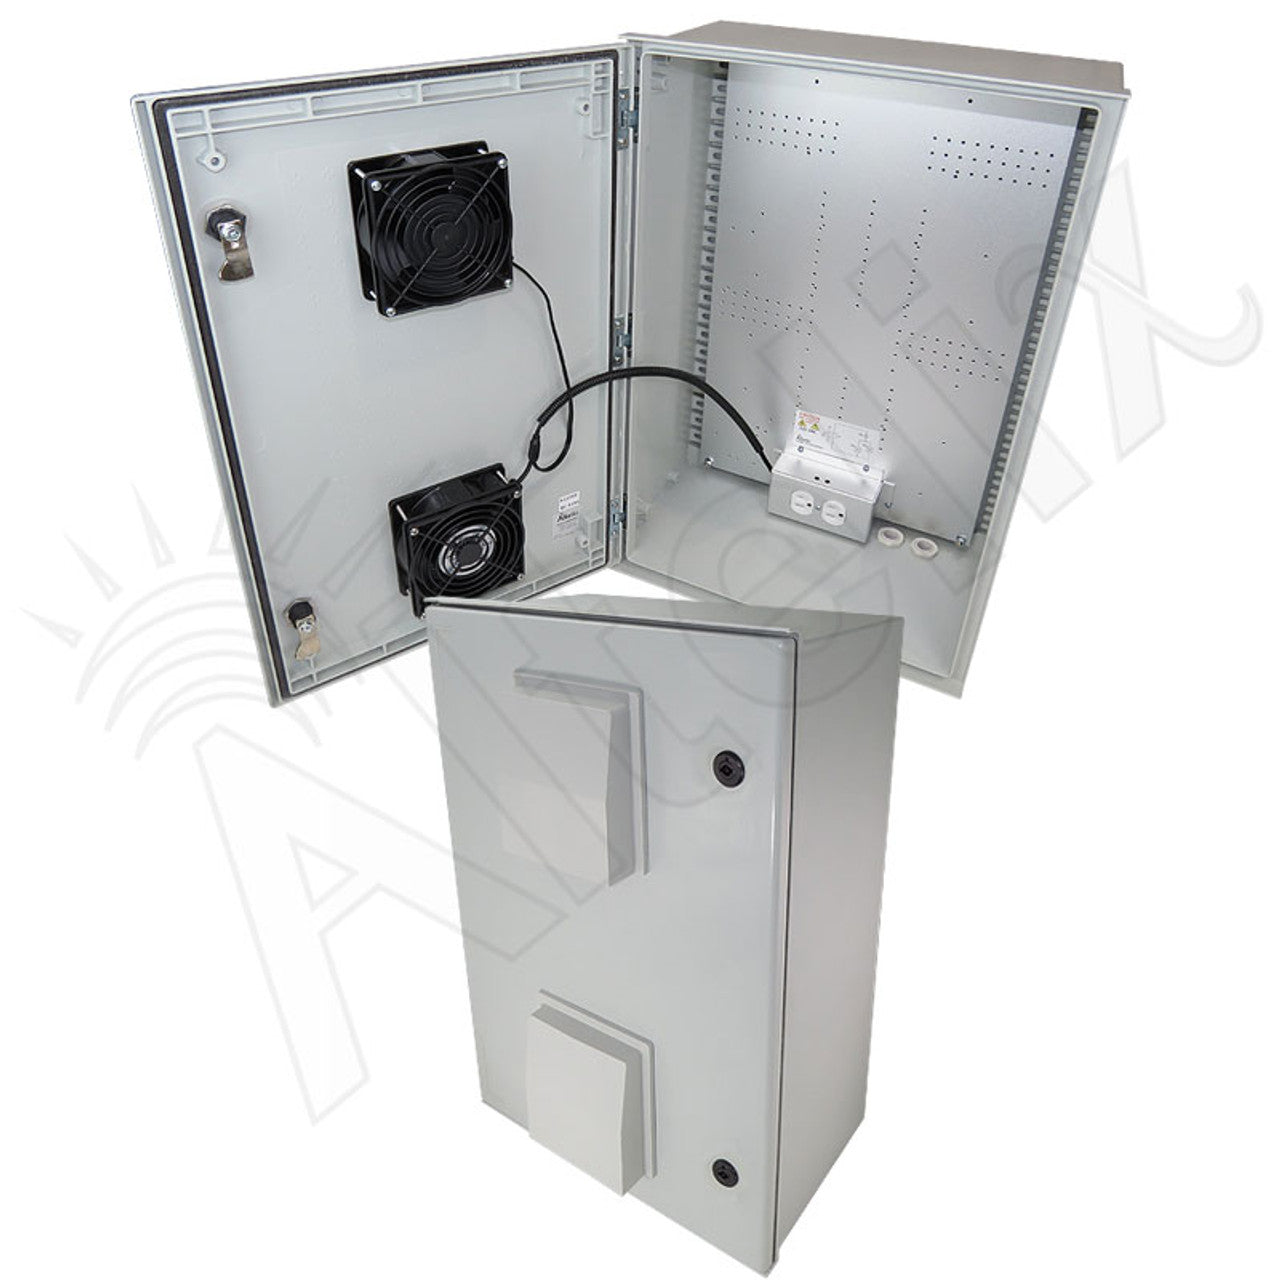 Altelix Vented Fiberglass Weatherproof NEMA Enclosure with 120 VAC Outlets & 85°F Turn-On Cooling Fan